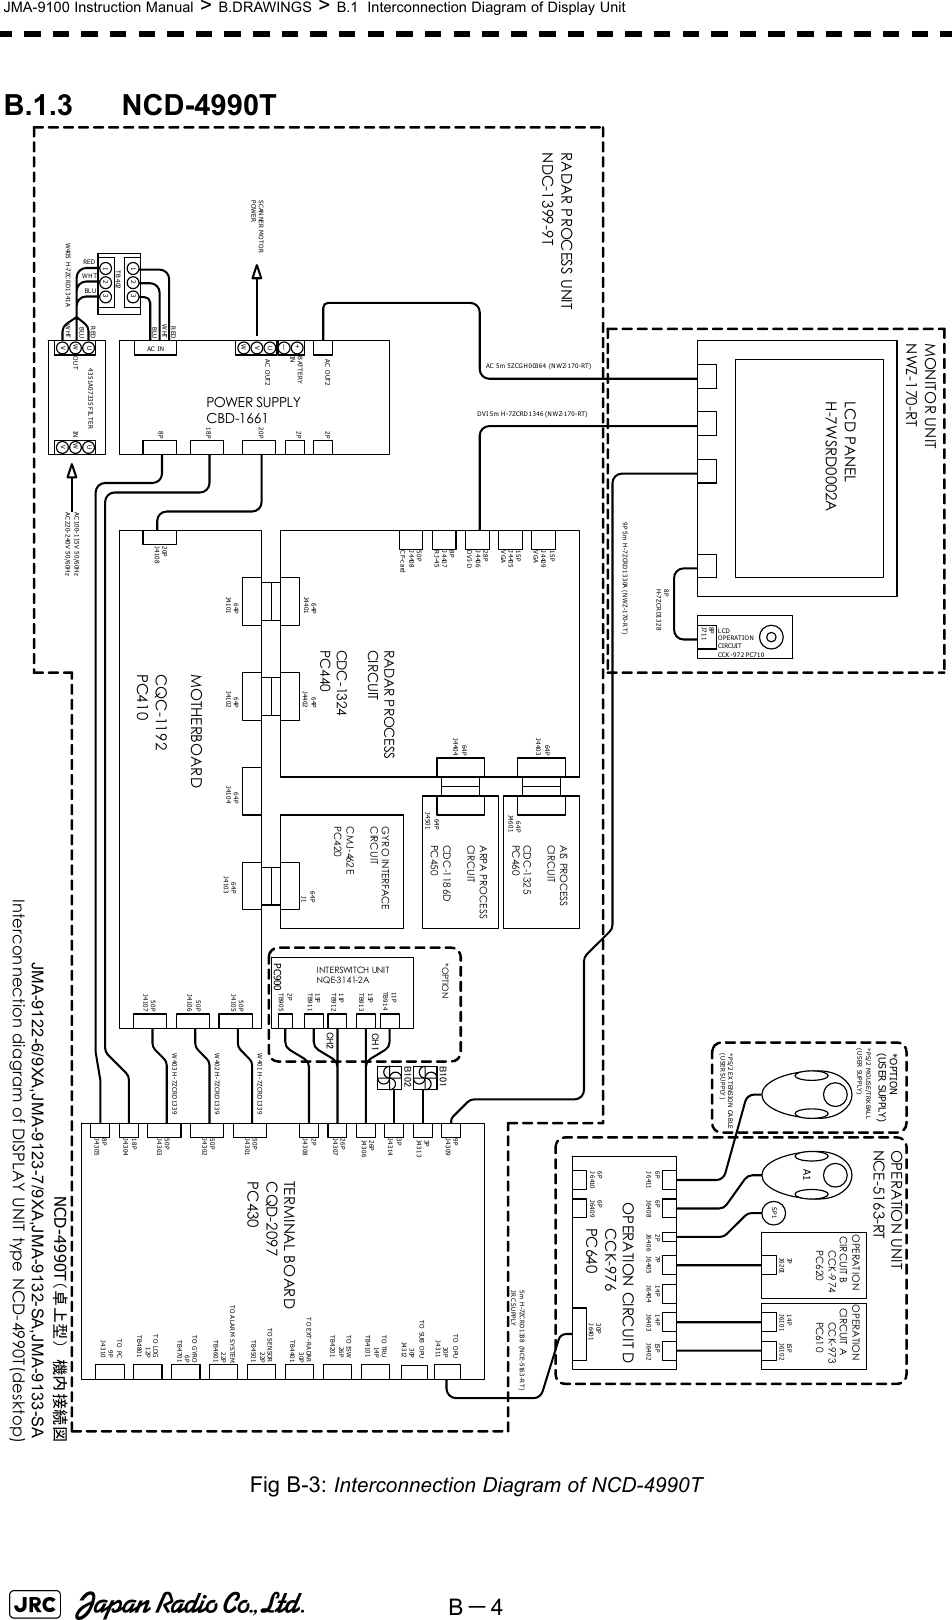 B－4JMA-9100 Instruction Manual &gt; B.DRAWINGS &gt; B.1  Interconnection Diagram of Display UnitB.1.3 NCD-4990TFig B-3: Interconnection Diagram of NCD-4990T2PJ430826PJ430726PJ430650PJ430118PJ43048PJ43053PJ43133PJ43149PJ430914PTB4101TO TRUTO ISW26PTB4201TO EXT-RADAR30PTB4401TO S ENSOR22PTB4501TO A LARM  SYSTEM22PTB4601TO GYRO6PTB4701TO LOG12PTB4801TO PC9PJ4310TERMINAL BOARDCQD-2097PC43050PJ430250PJ430330PJ4311TO OPU30PJ4312TO SUB OPU6PJ 64116PJ 64106PJ64096PJ64082PJ64067PJ640514PJ640414PJ640315 PJ640230PJ6401OPERATION CIRCUIT D      CCK-976      PC64014PJ610115 PJ6102OPERATION  CIRCUI T  A        CCK-973        PC6107PJ6201OPERATION  CIRC UI T B       CCK -974       PC620SP1A1*PS/2 EX TENSION  CA BLE(USER SUPPLY )OPERATION UNITNC E -51 6 3- RT5 m  H -7Z C RD 1 33 8  ( N CE - 5 16 3 - R T )JRC SU PPLYB101B102PC90011PTB91415PTB91311PTB91215PTB9112PTB905INTERSWITCH UNITNQE-3141-2ACH1CH250PJ410550PJ410650PJ4107*OPTIONW401 H -7ZCRD1339W402 H -7ZCRD1339W403 H -7ZCRD133964PJ41 0364PJ410464PJ 410264PJ410164PJ440164PJ 440264PJ1GYRO INTERFACECIRCUITC MJ -462 EPC420RADAR P ROCESSCI RC UITCDC- 1324PC440MOTHERBOARDCQC-119 2PC41064PJ440364PJ4404AIS PROCESSCIRCU ITCDC -1 32 5PC 46 064PJ460164PJ4501ARPA PROCESSCIRCU ITCDC -1 18 6DPC 45 015PJ4409VGA15PJ4405VGA28PJ4406DVI-D8PJ4407RJ-4550PJ4408CF-cardLCDOPERATIONCIRCUITCCK -972 PC71 08PJ71 1MONITOR UNITNWZ-170-RTLCD PANELH-7WSRD0002A8PH-7ZCR D13289P 5m  H-7ZCRD1330A  (NWZ-170-R T)DVI 5m  H-7ZCRD1346 (NWZ-170-RT)20PJ41088PPOWER SUPPLYCBD-166118P20P*PS/2 MOUSE/TRKBALL(USER SUPPLY)*OPTION(USER SUPPLY)2P2PAC OUT2+ーUVWB ATTERYINAC OUT2AC INUWVUWV4351A07335 FILTERINOUTREDWHTBLUREDWHTBLUAC 5m 5ZCGH00364 (NWZ-170-RT)AC100-115V 50/60HzAC220-240V 50/60HzSCANNER MOTORPOWERNCD-4990T（卓上型）　機内接続図Interconnection diagram of DISPLAY UNIT type NCD-4990T(desktop)RADAR PROCESS UNITNDC-1399-9T1 2 31 2 3REDBLUWHTW405 H -7ZC RD1341ATB 402JMA-9122-6/9XA,JMA-9123-7/9XA,JMA-9132-SA,JMA-9133-SA